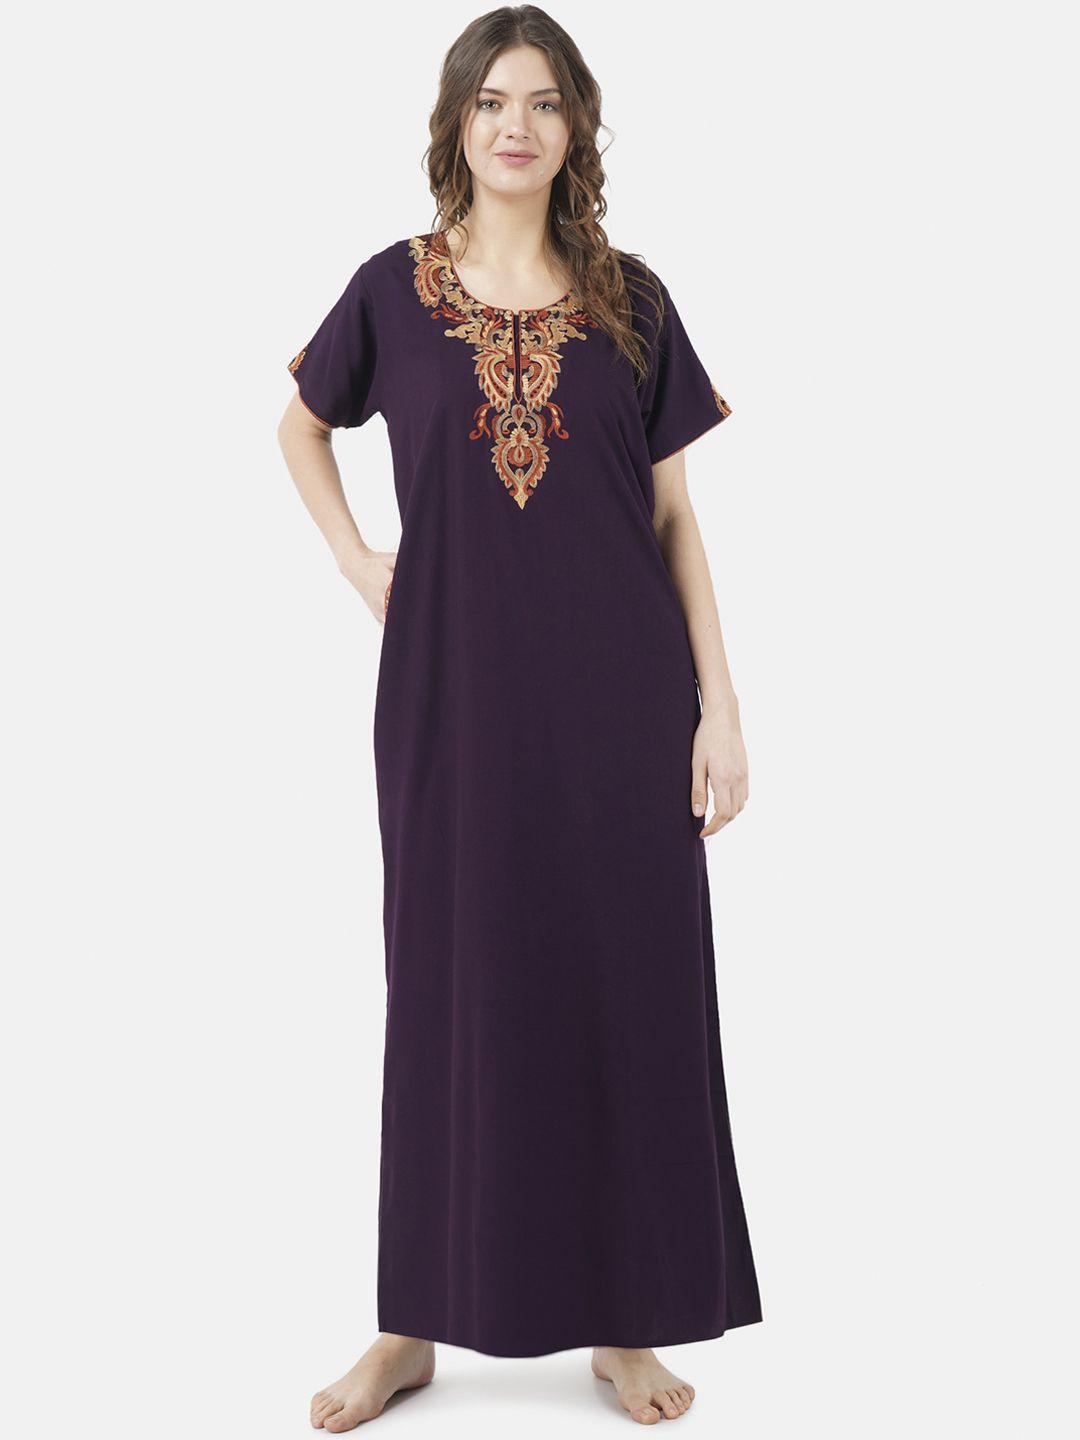 koi sleepwear purple embroidered nightdress